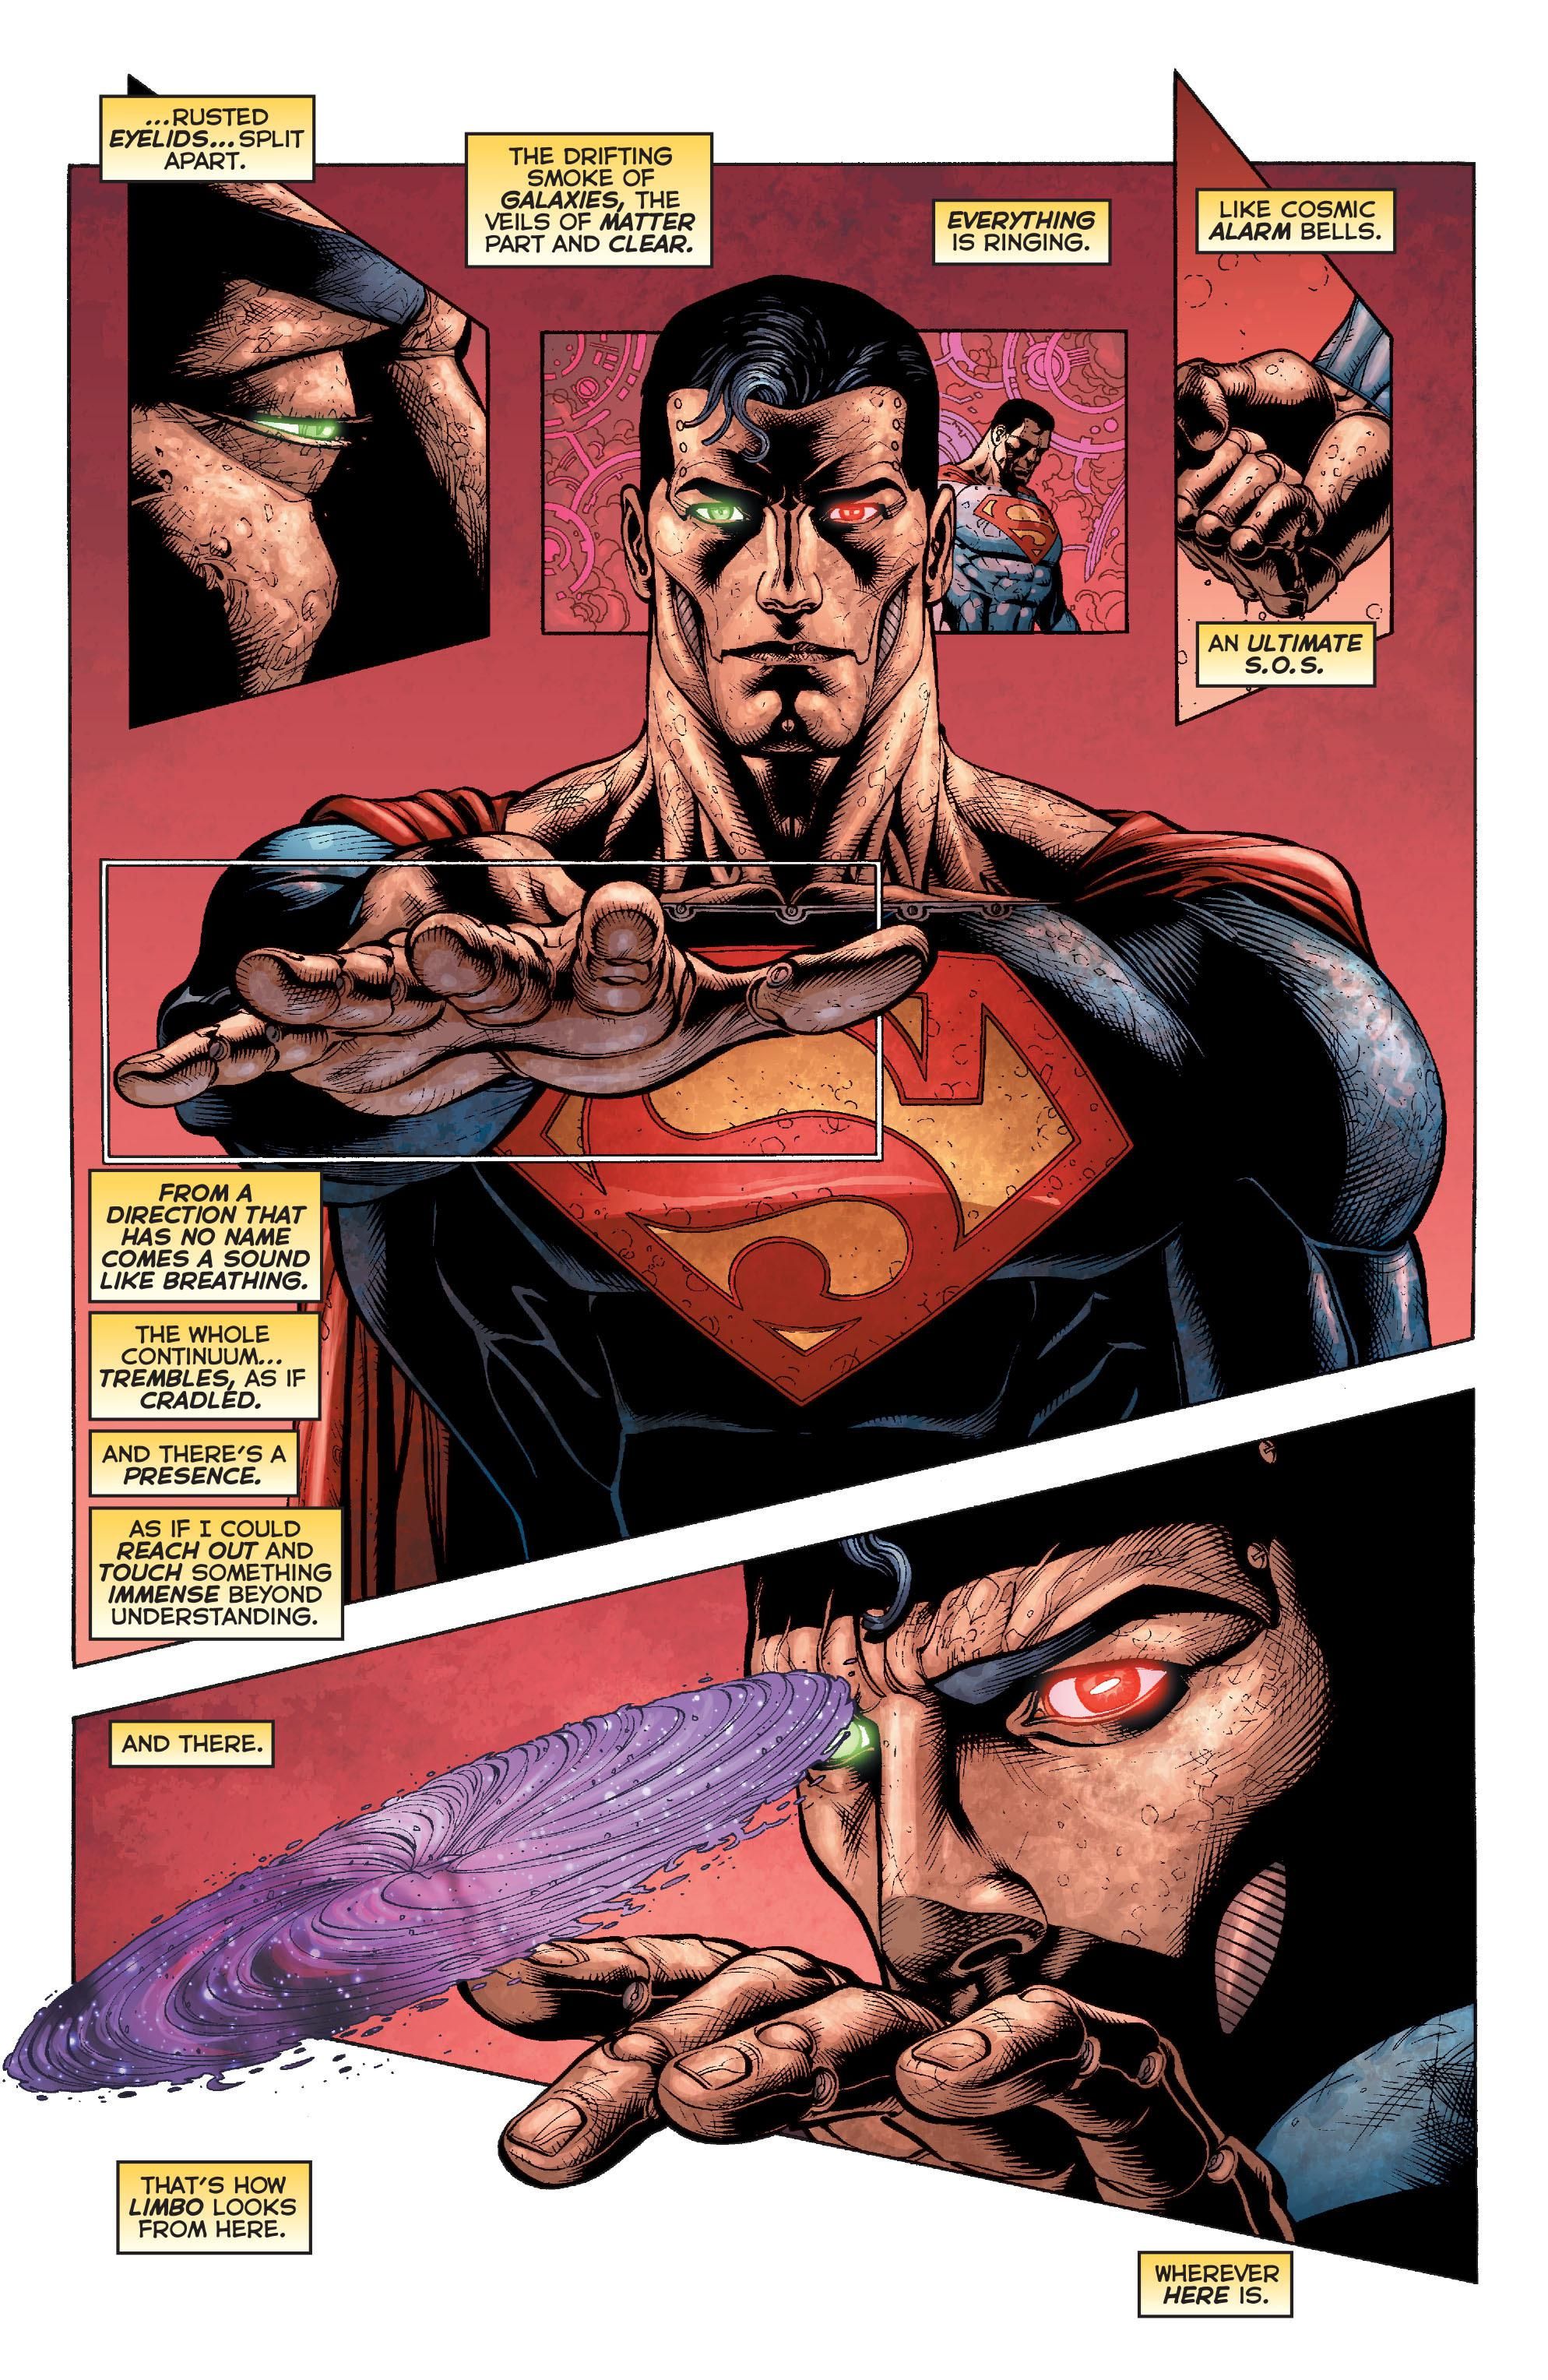 Comic Excerpt Final Crisis Superman Beyond of 2: Cosmic Armor Superman. Superman comic art, Comics, Superman comic